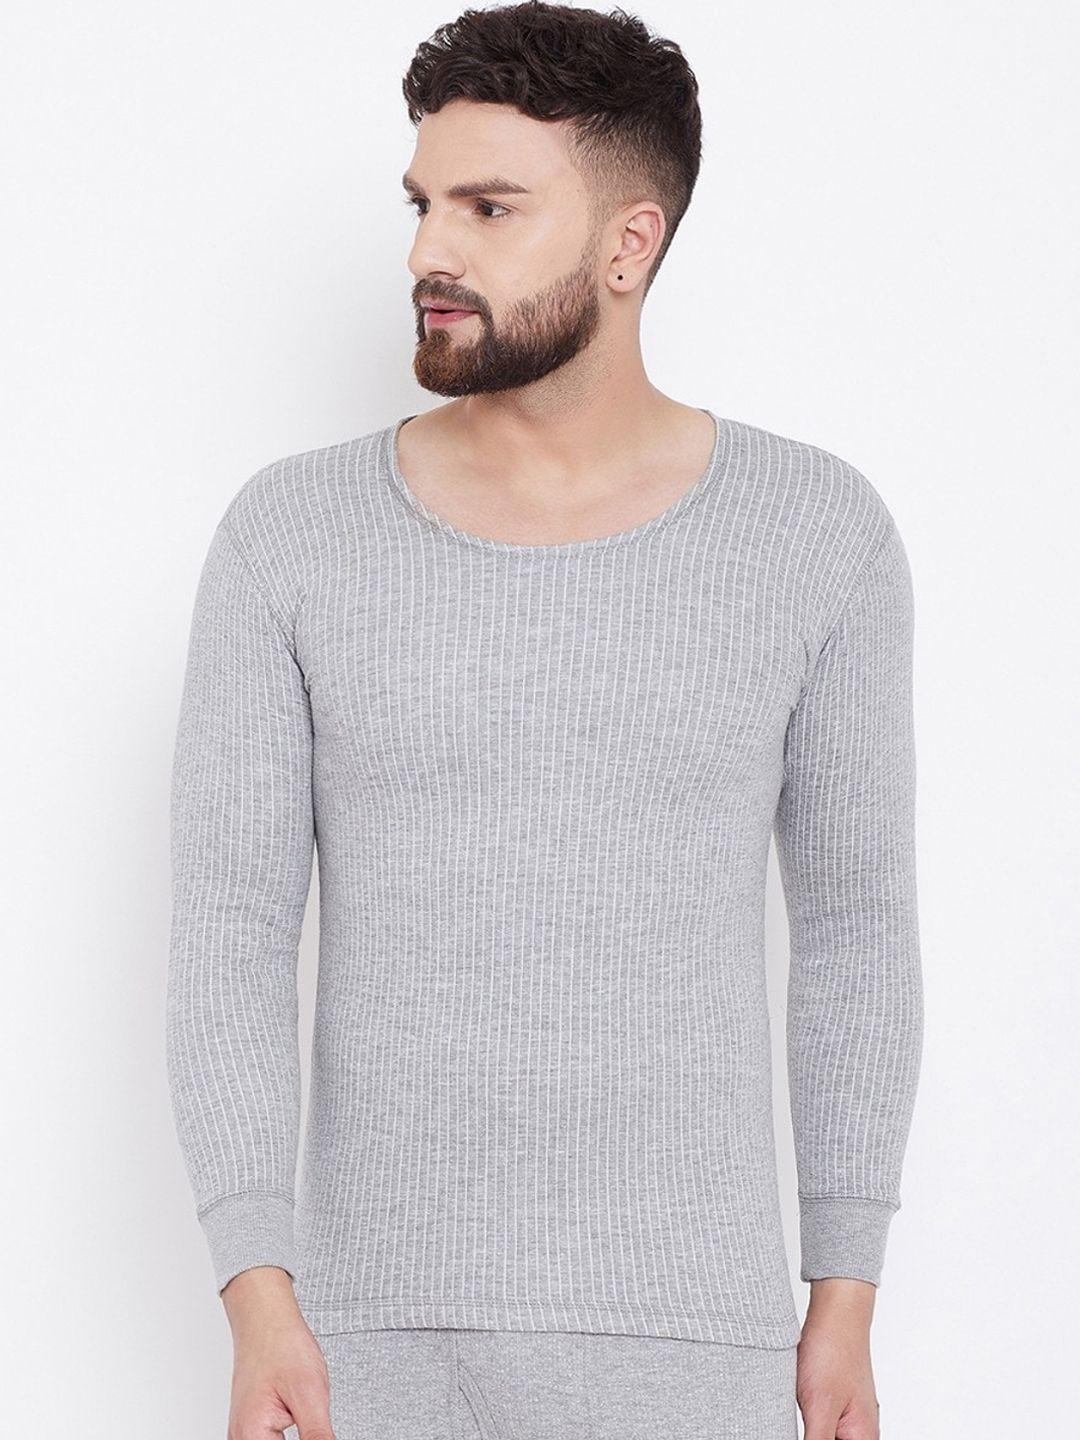 neva-men-grey-striped-cotton-thermal-t-shirt